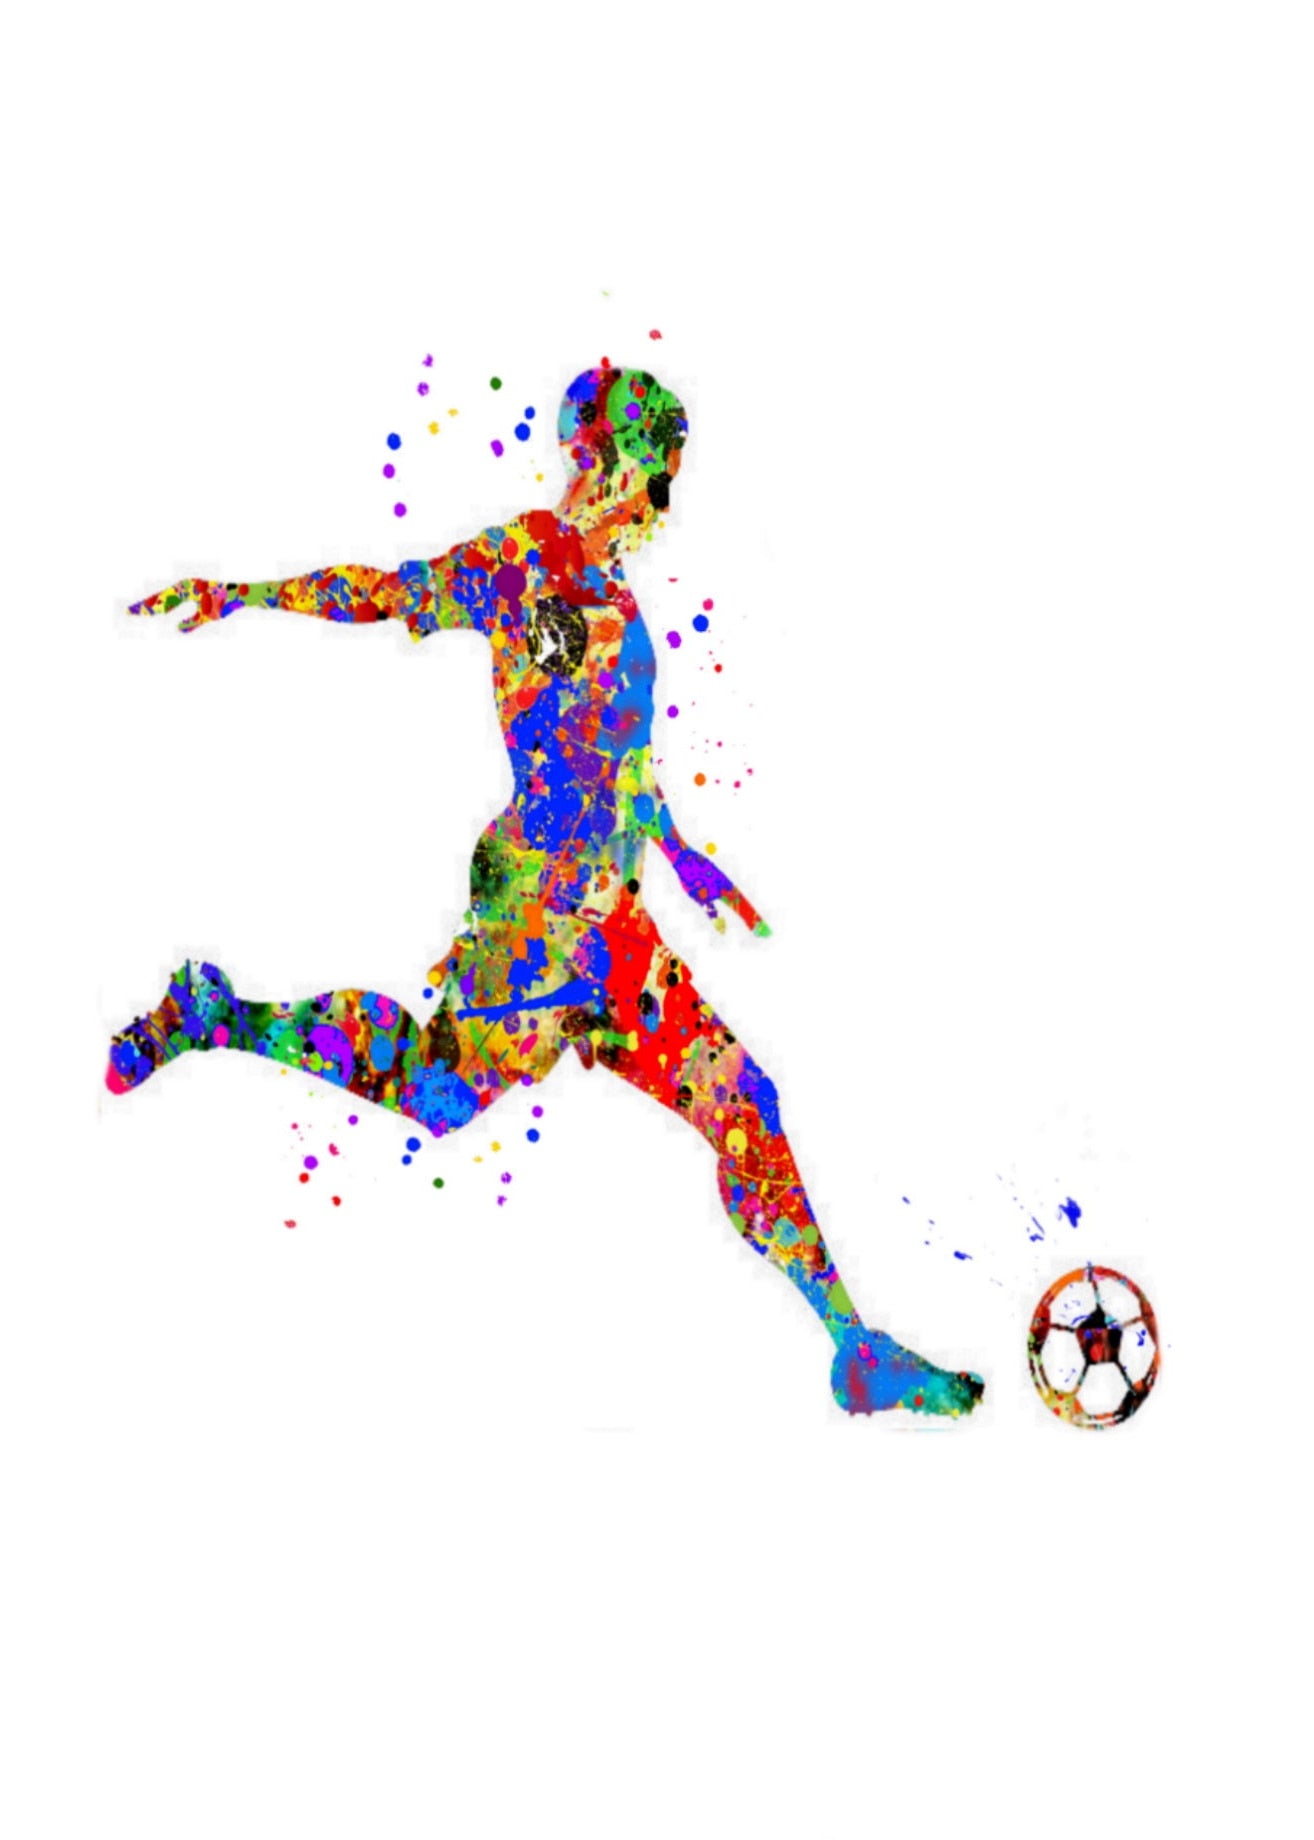 CORX Designs - Boy Play Soccer Football Watercolor Sport Canvas Art - Review